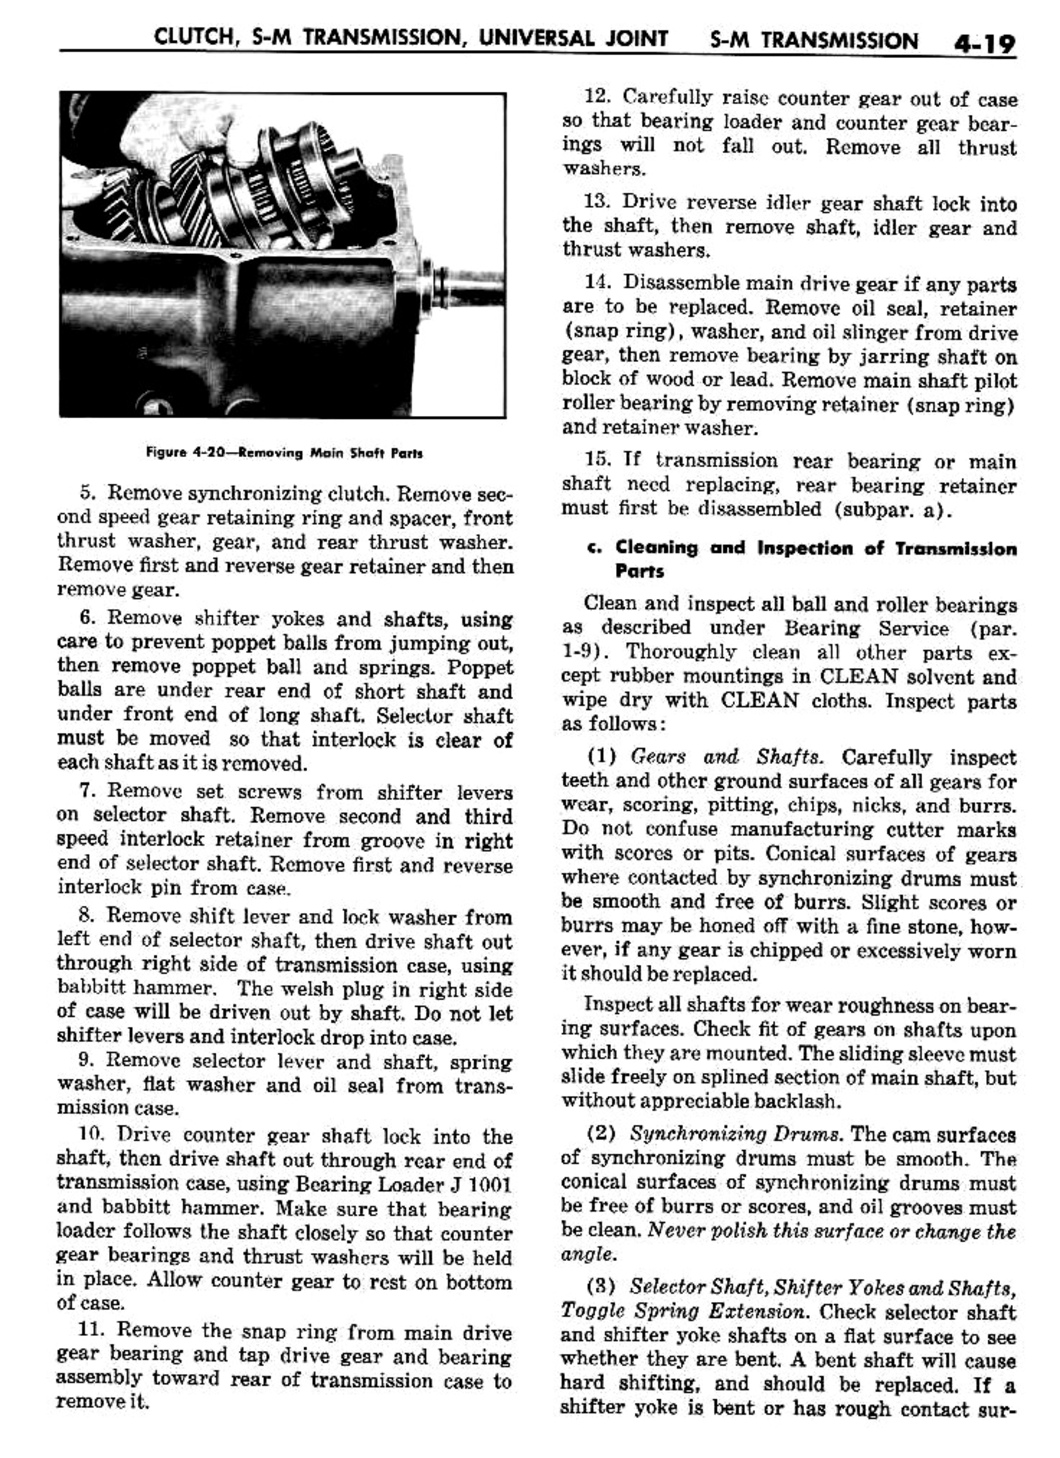 n_05 1960 Buick Shop Manual - Clutch & Man Trans-019-019.jpg